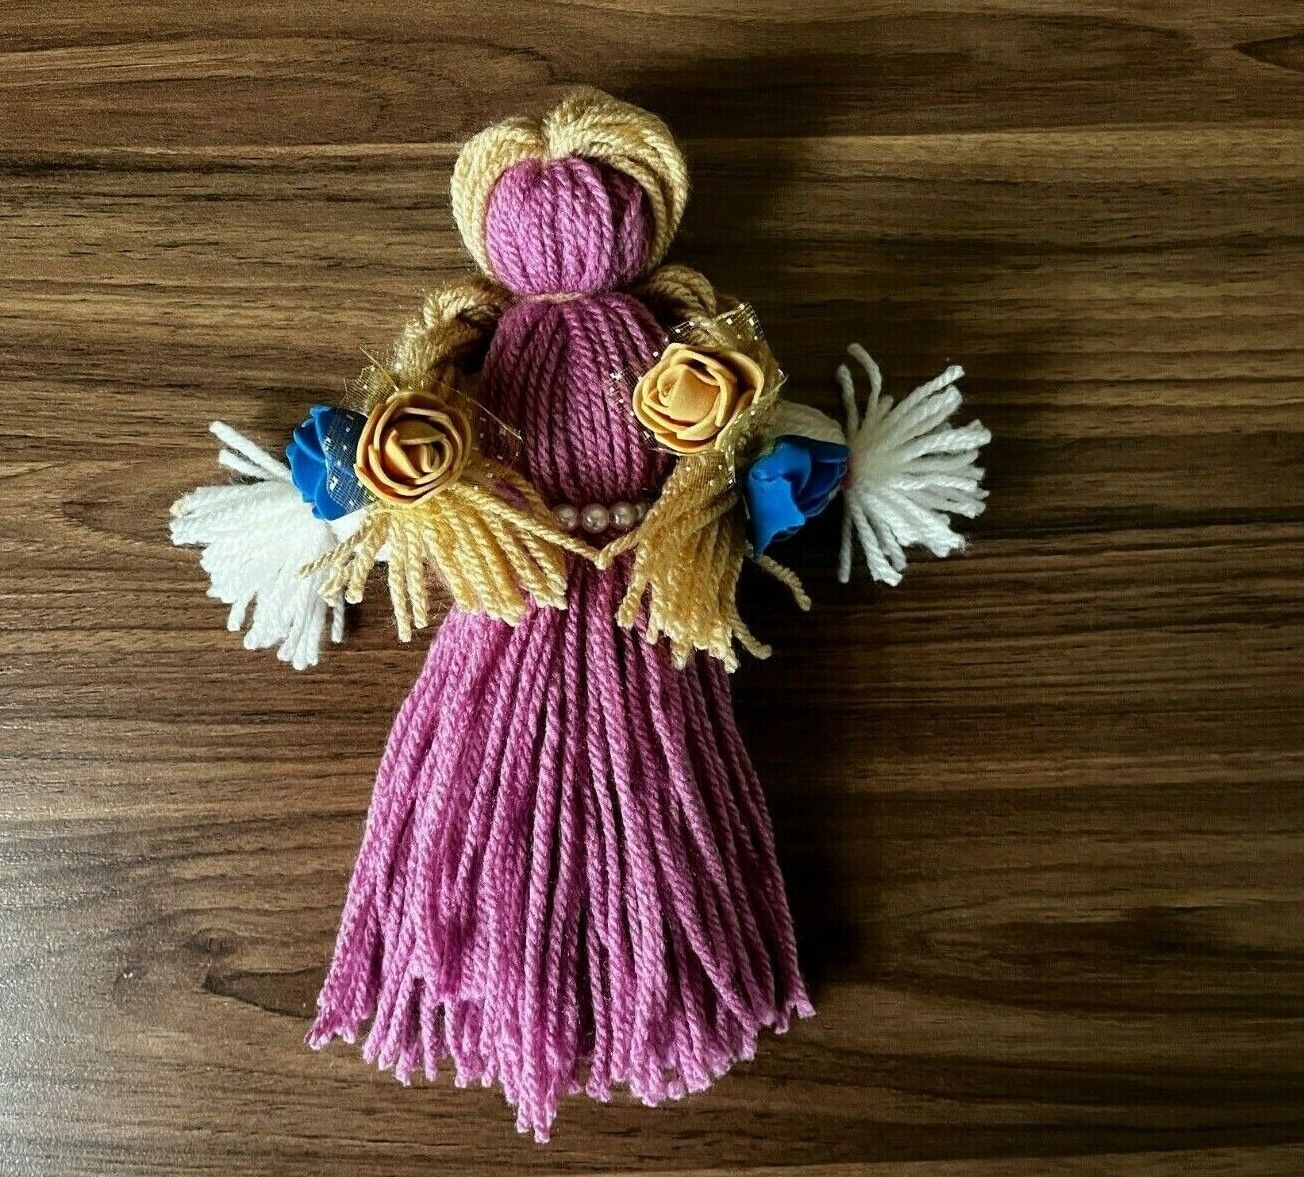 Motanka Ukraine doll. cloth dolls handmade. Traditional doll